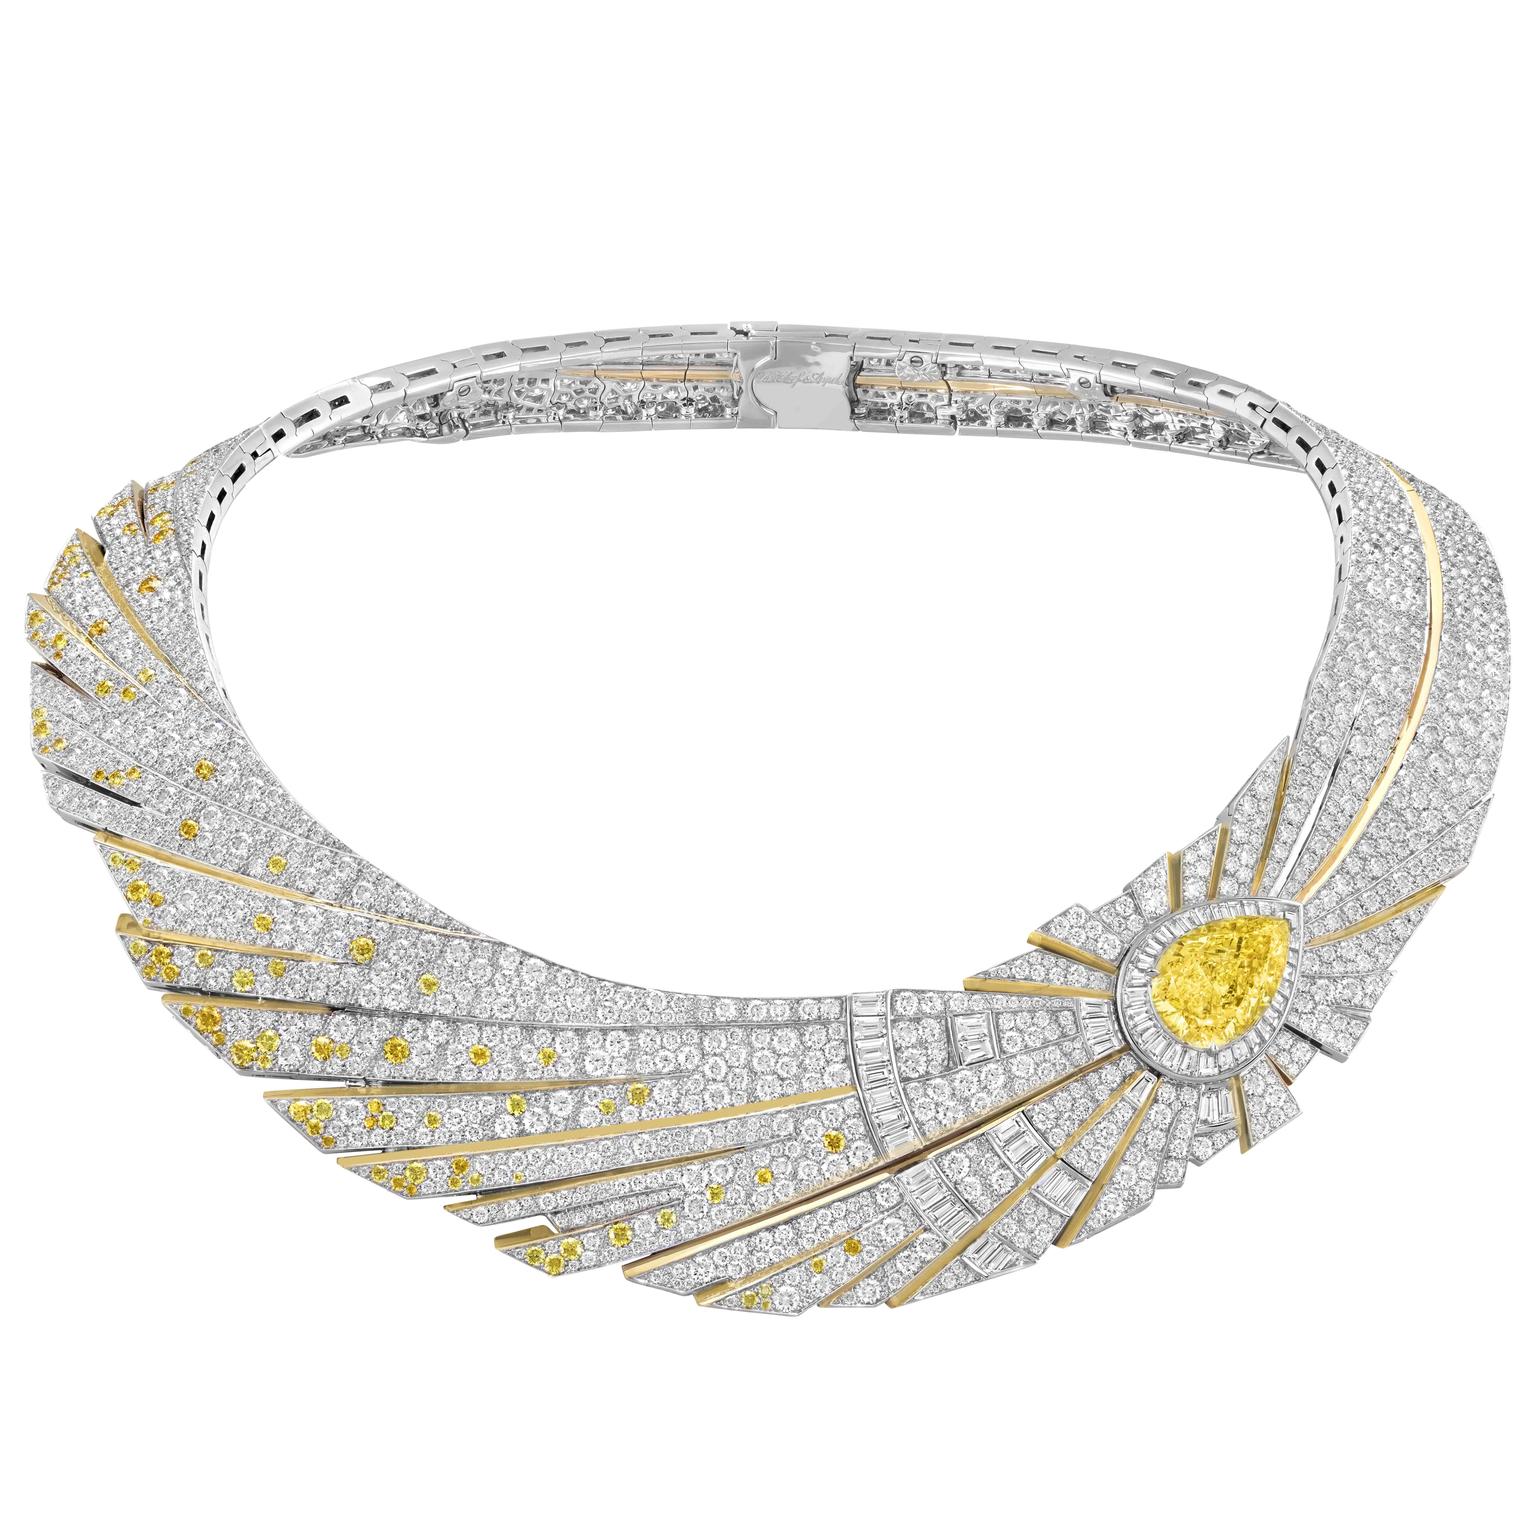 Halley necklace by Van Cleef & Arpels